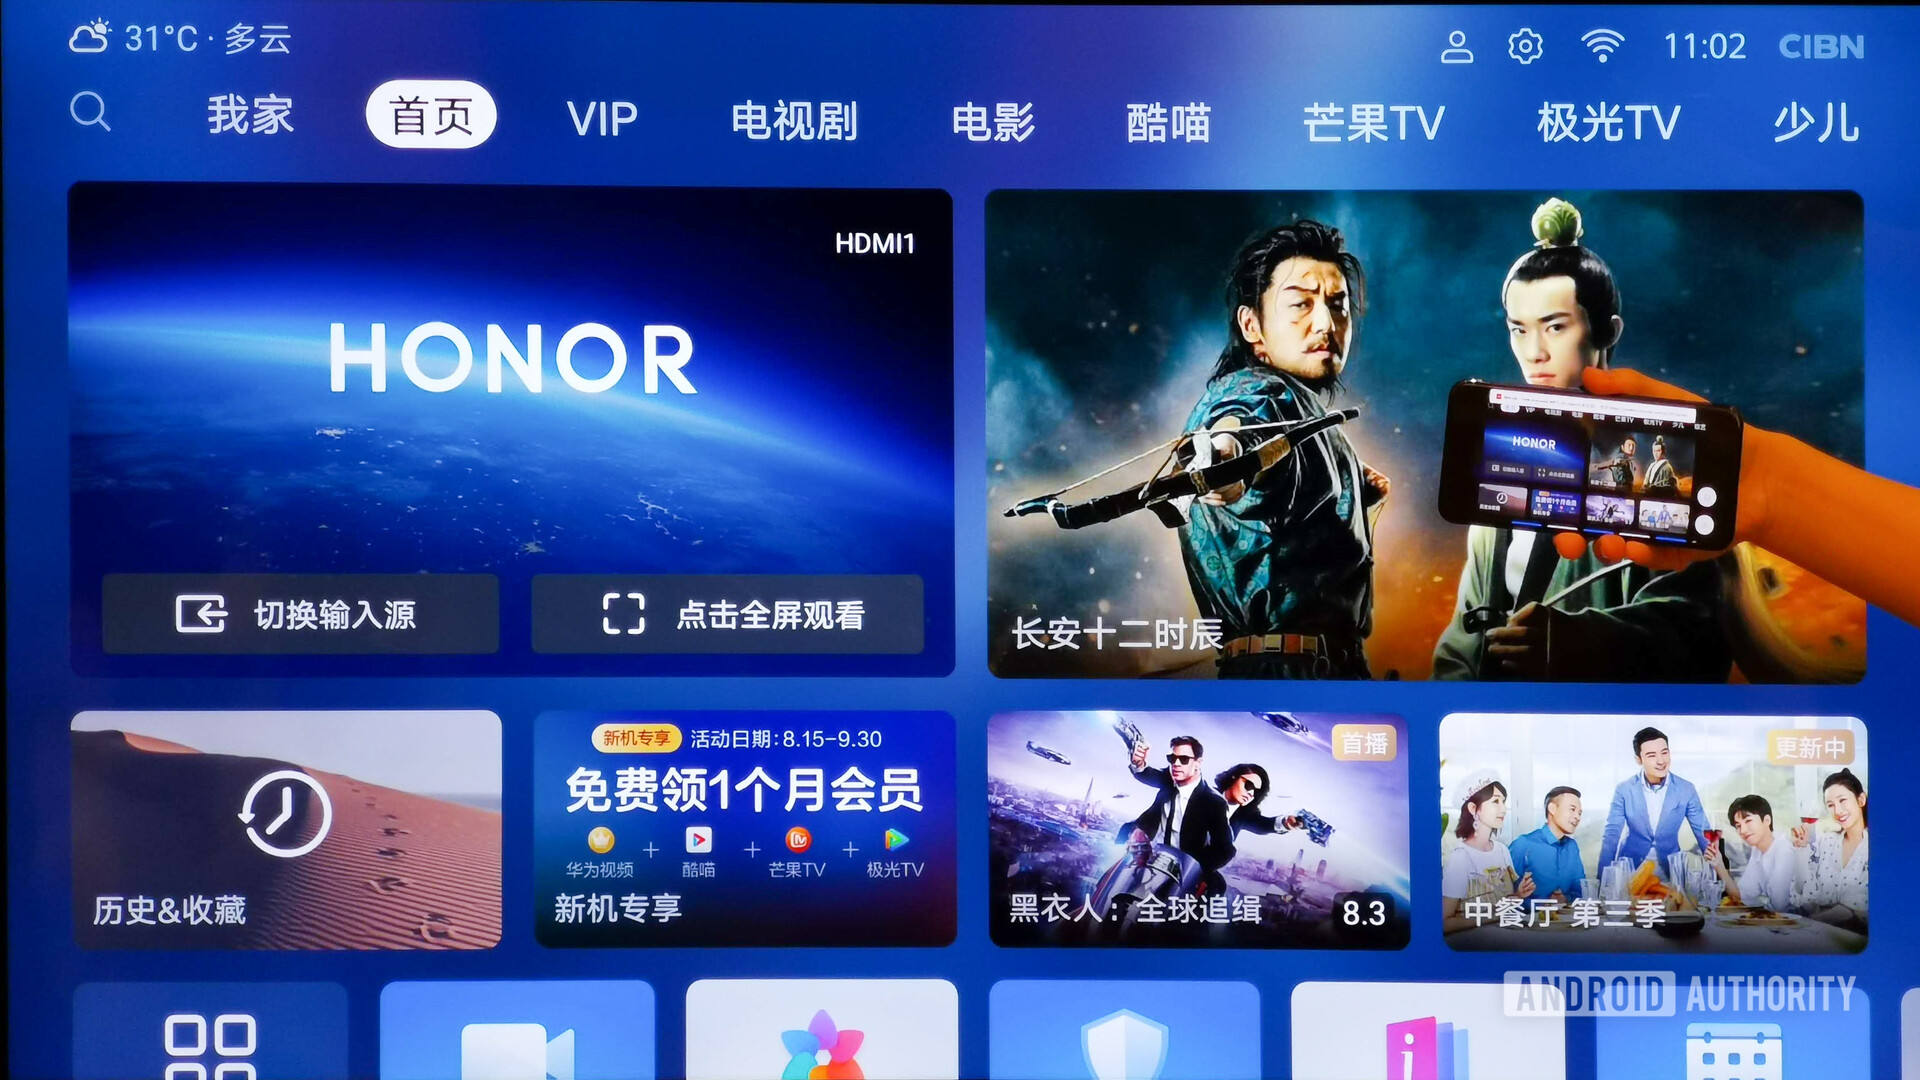 Huawei HQ Honor Vision screen mirroring